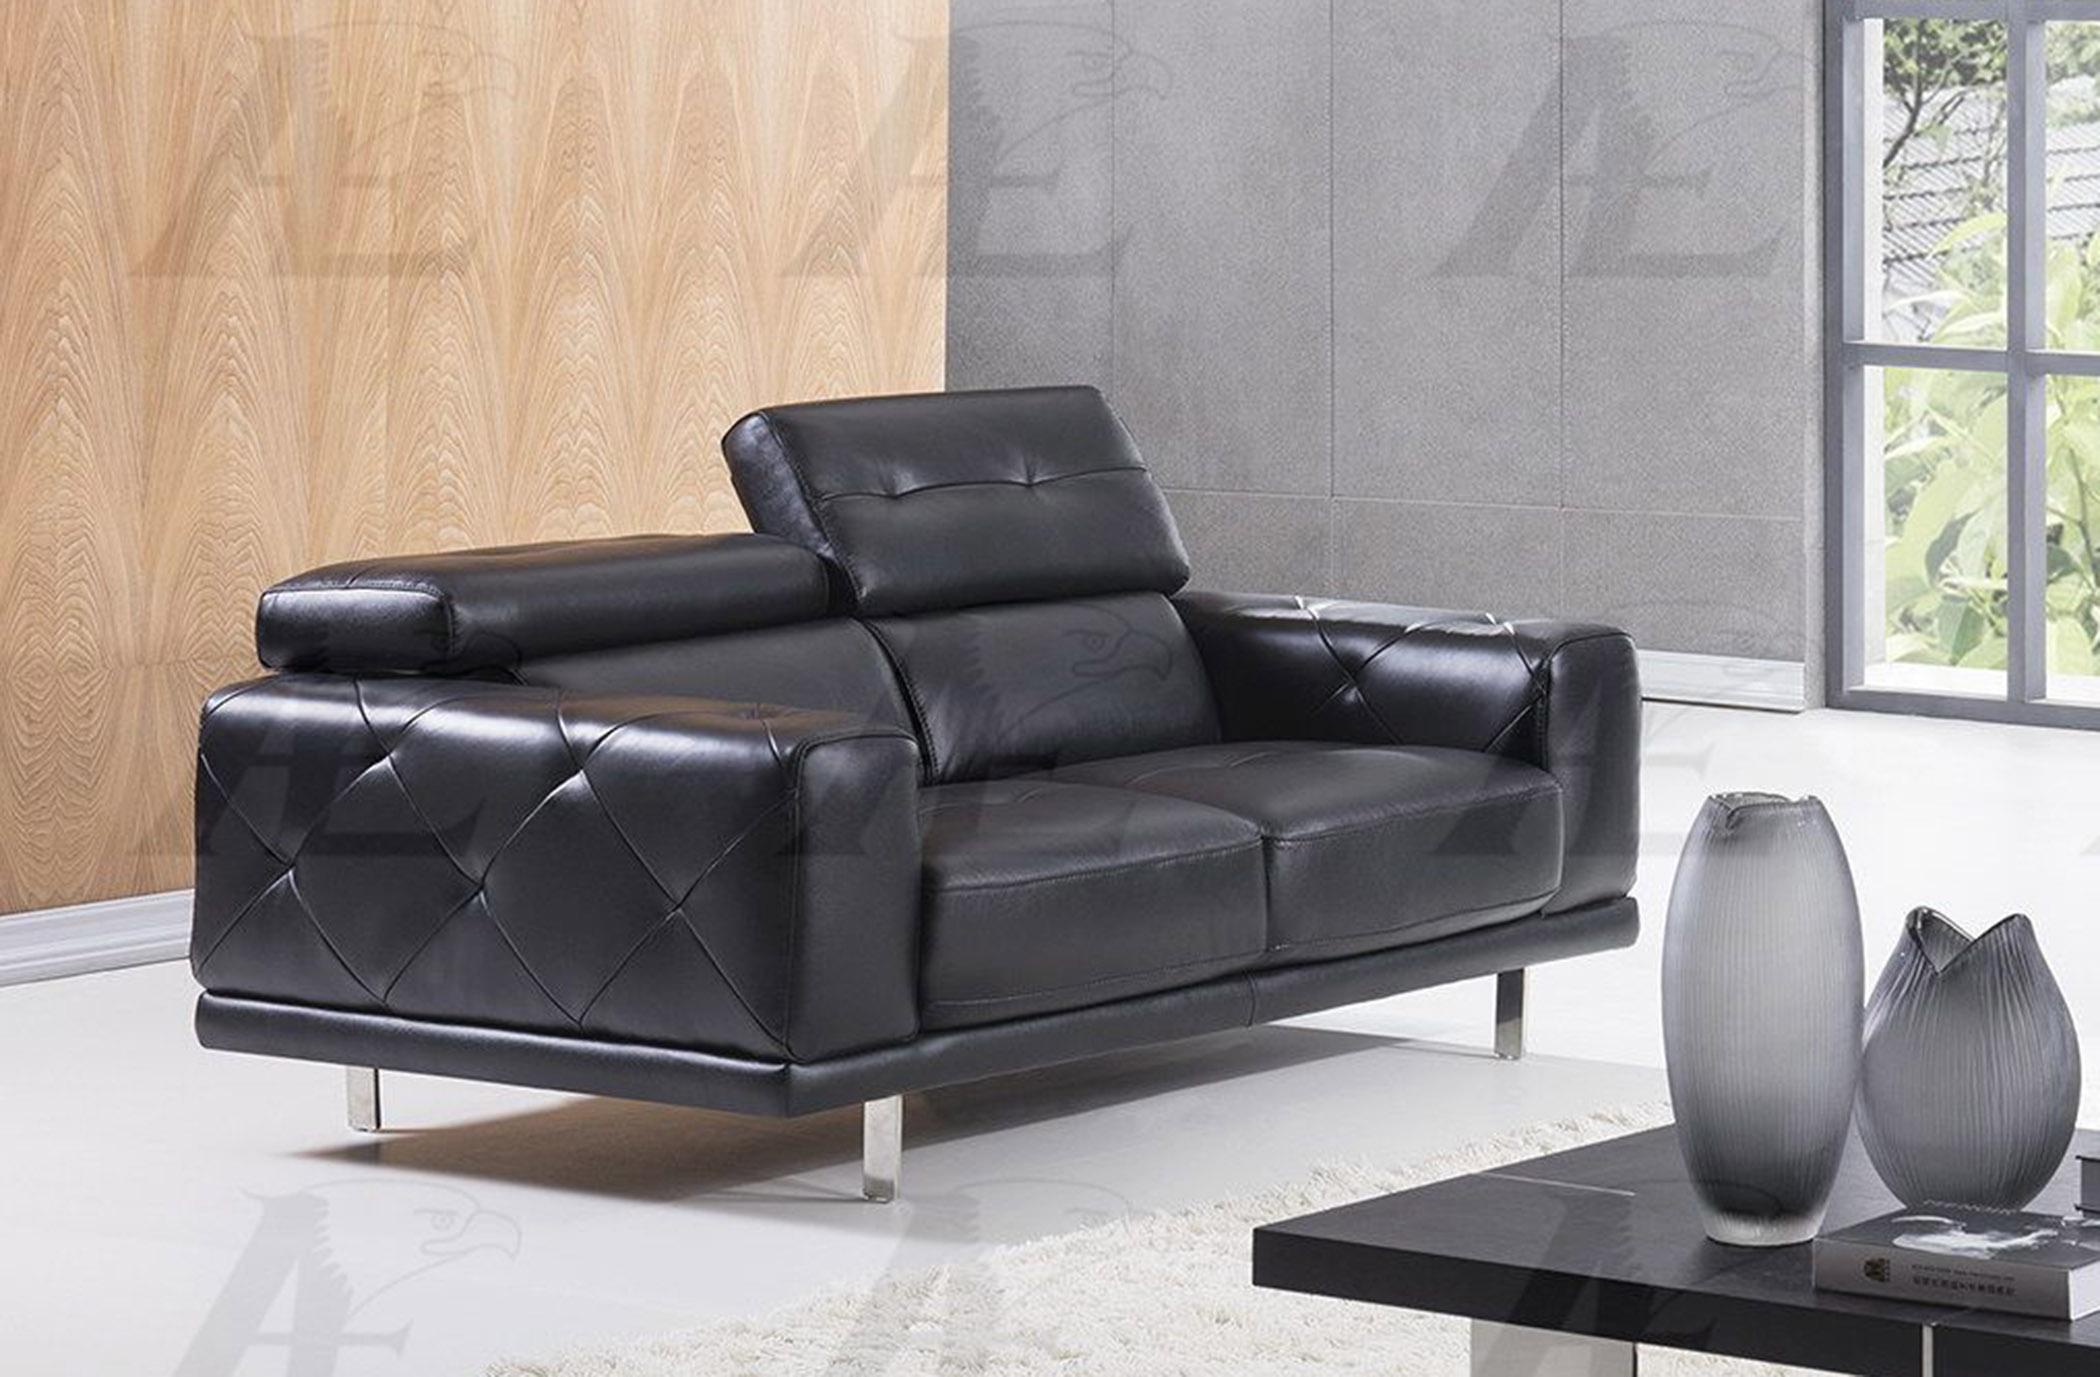 

    
American Eagle Furniture EK039-BK Sofa Black EK039-BK
